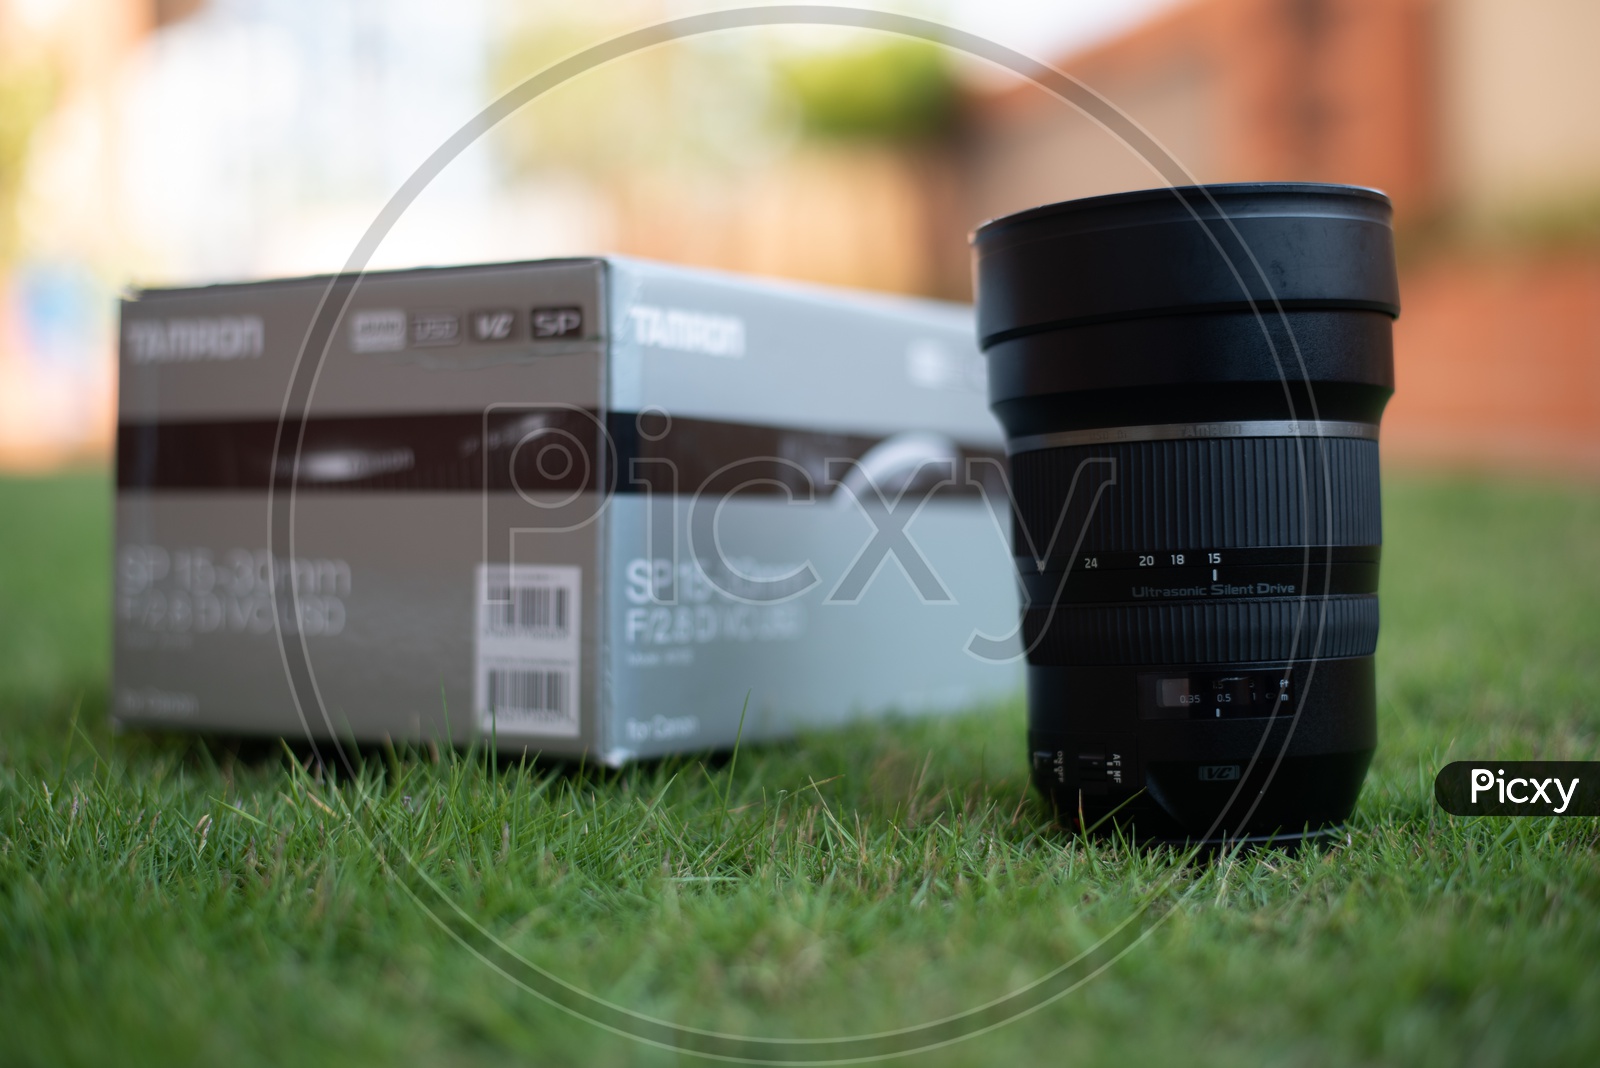 Tamron Sigma 15-30 mm DSLR Lens On Lawn Garden Grass Backdrop